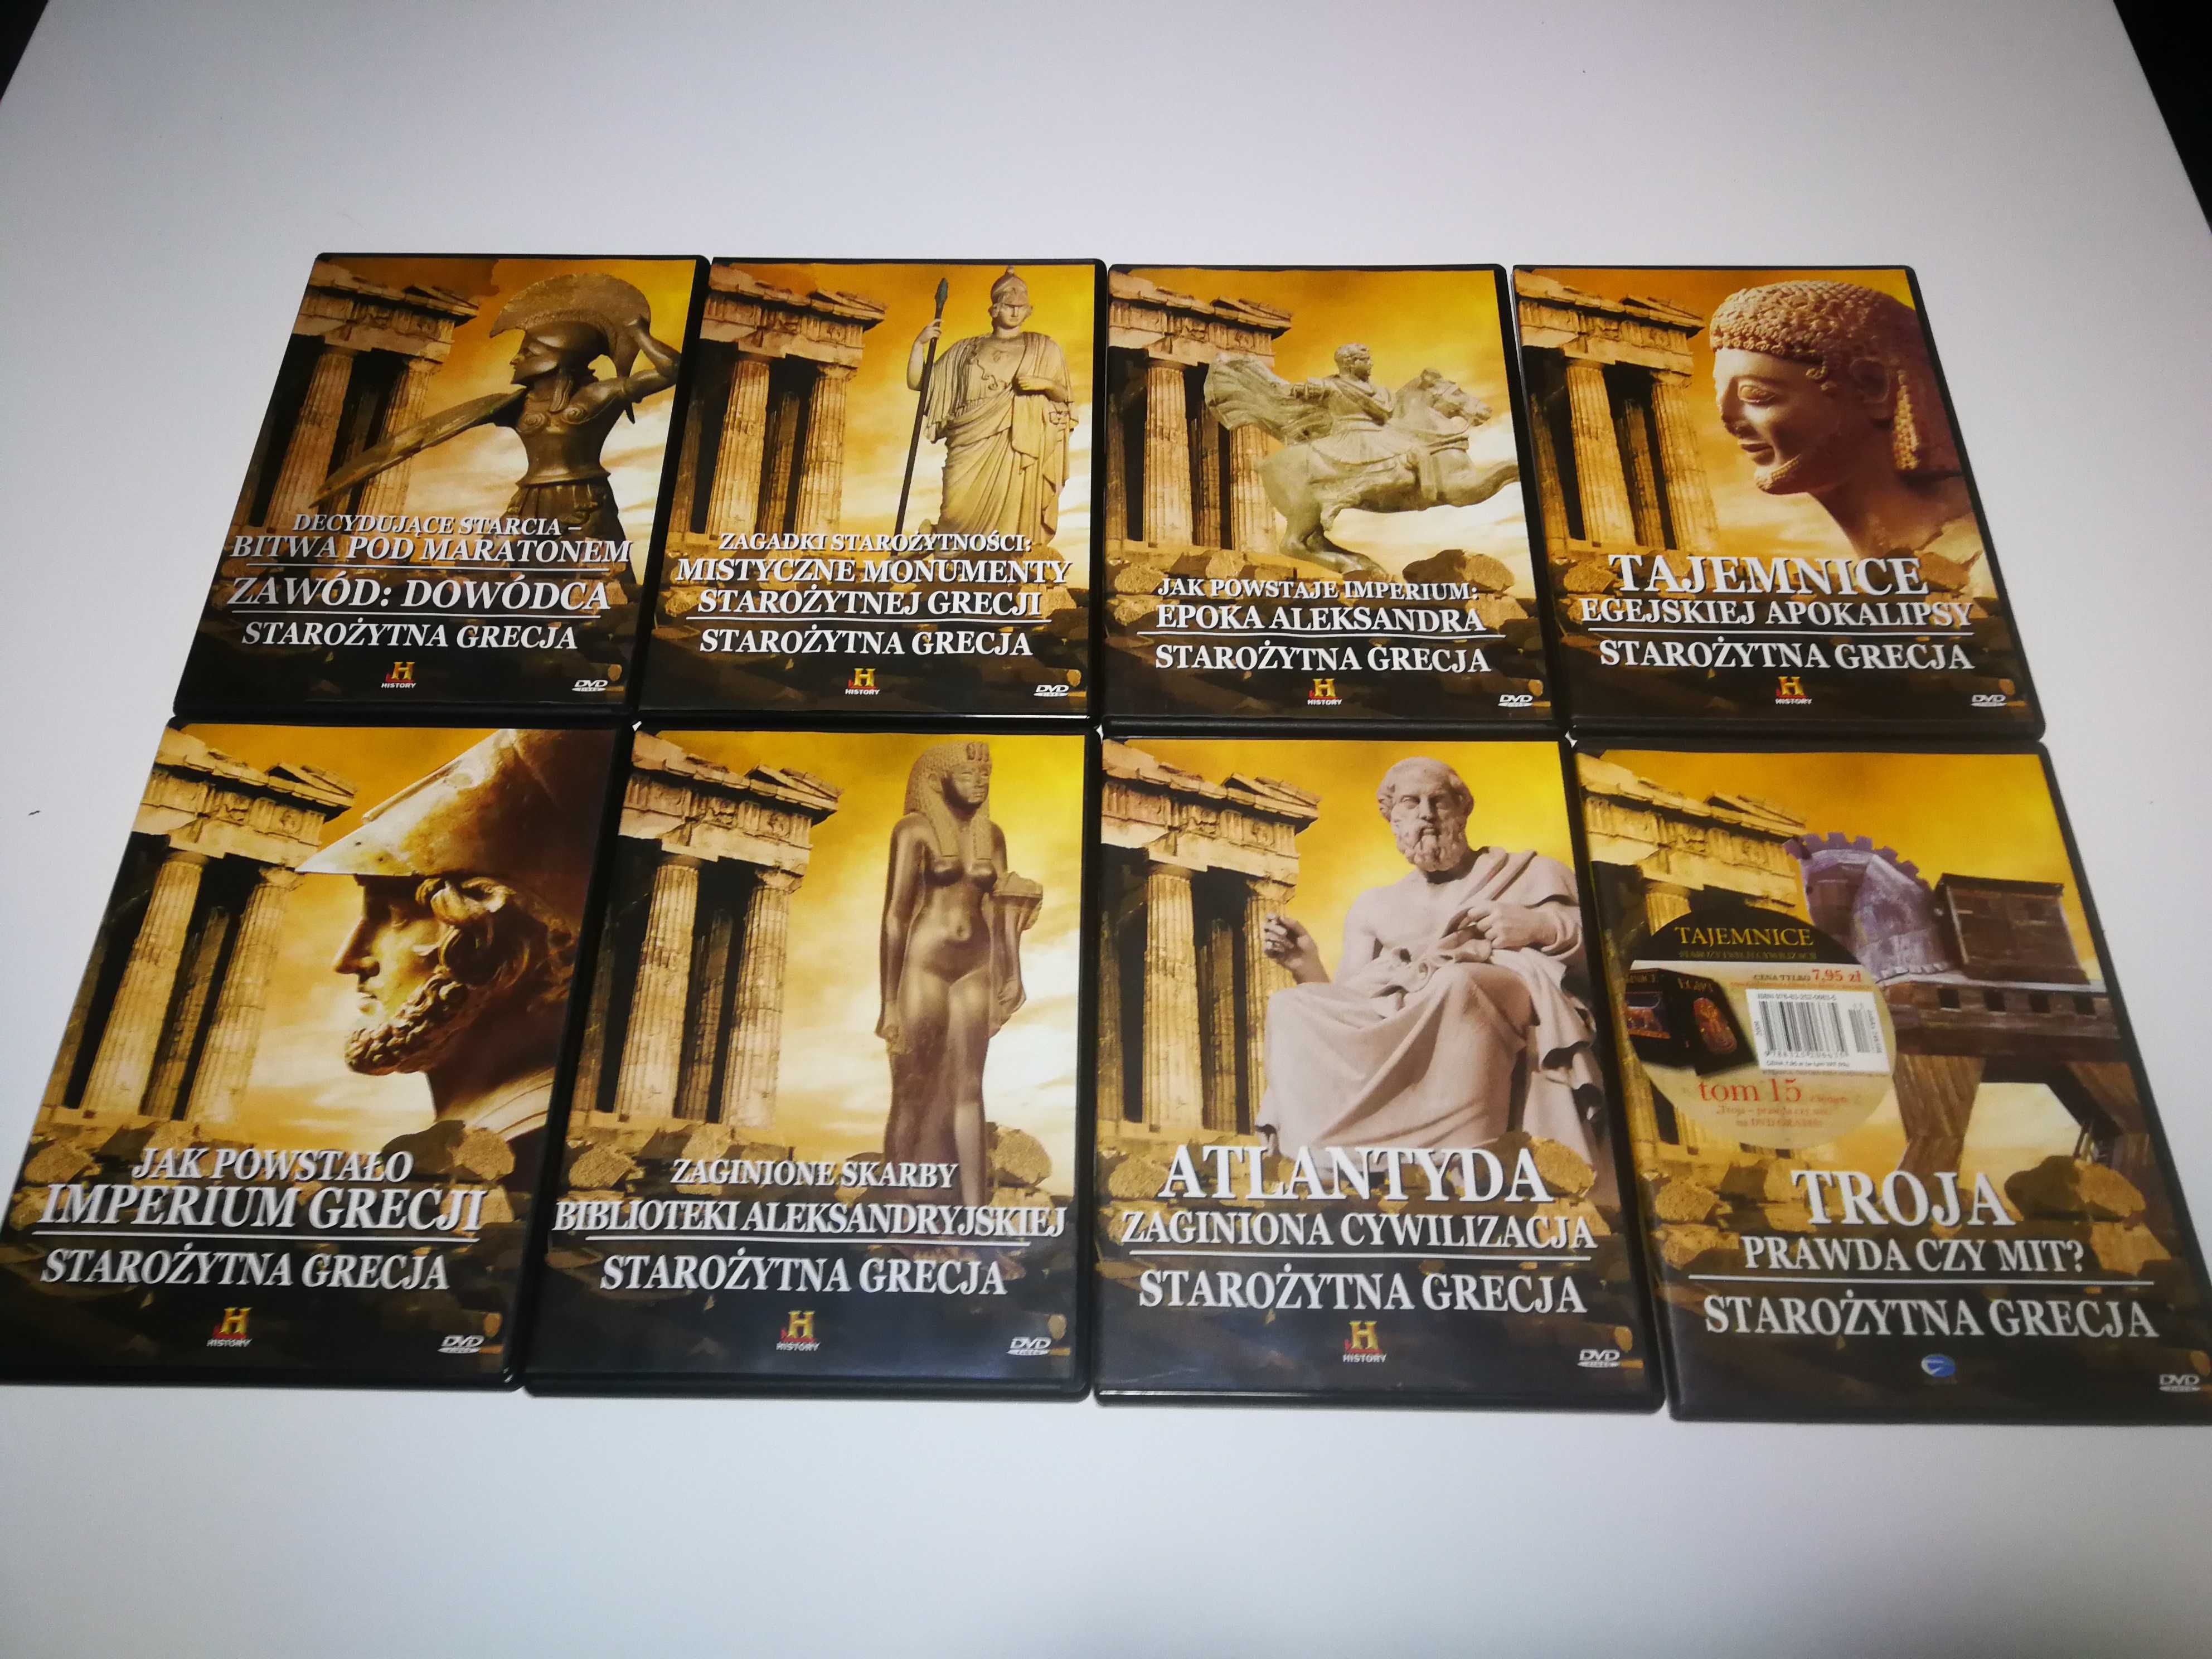 Starożytna Grecja kolekcja na dvd/ Starożytna Grecja film na dvd seria